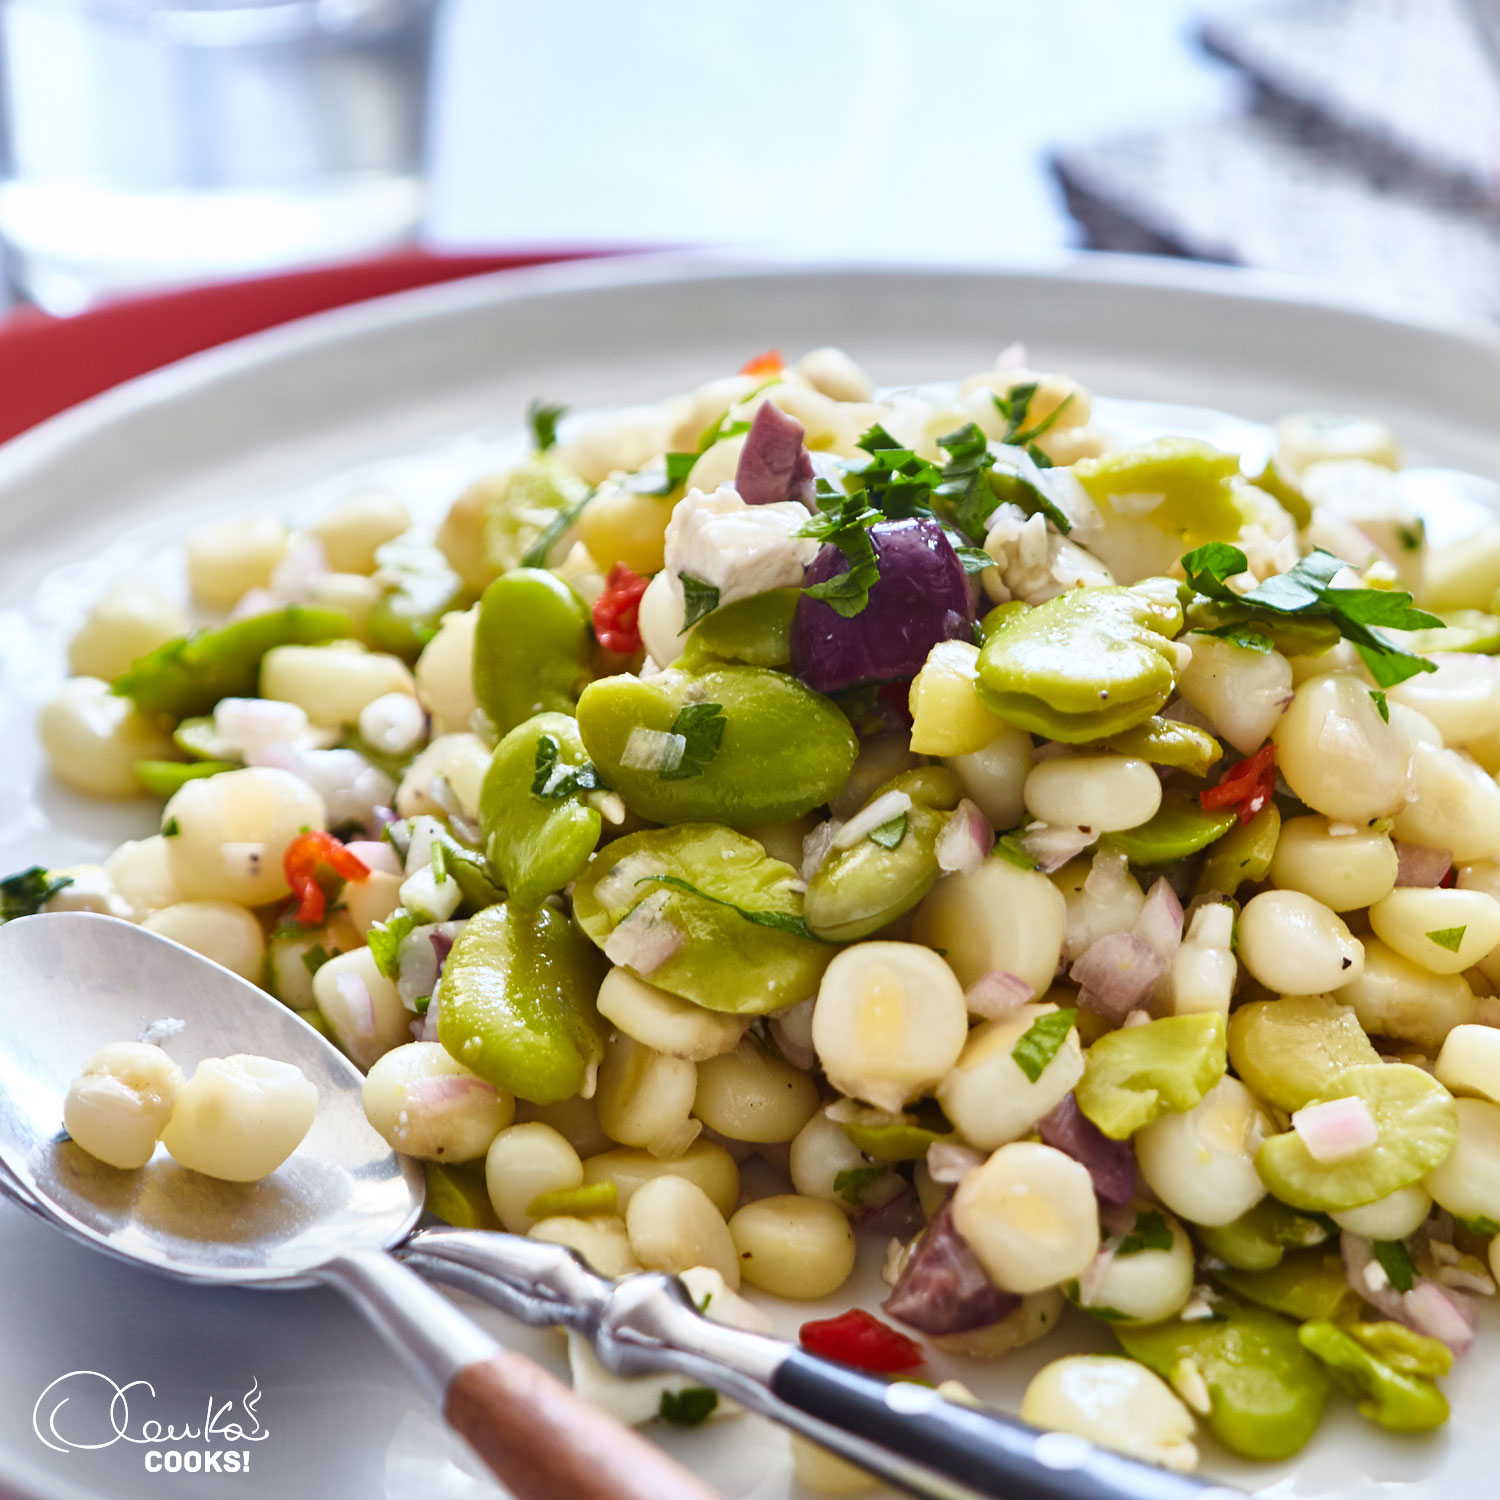 Solterito (Fava Bean Salad)